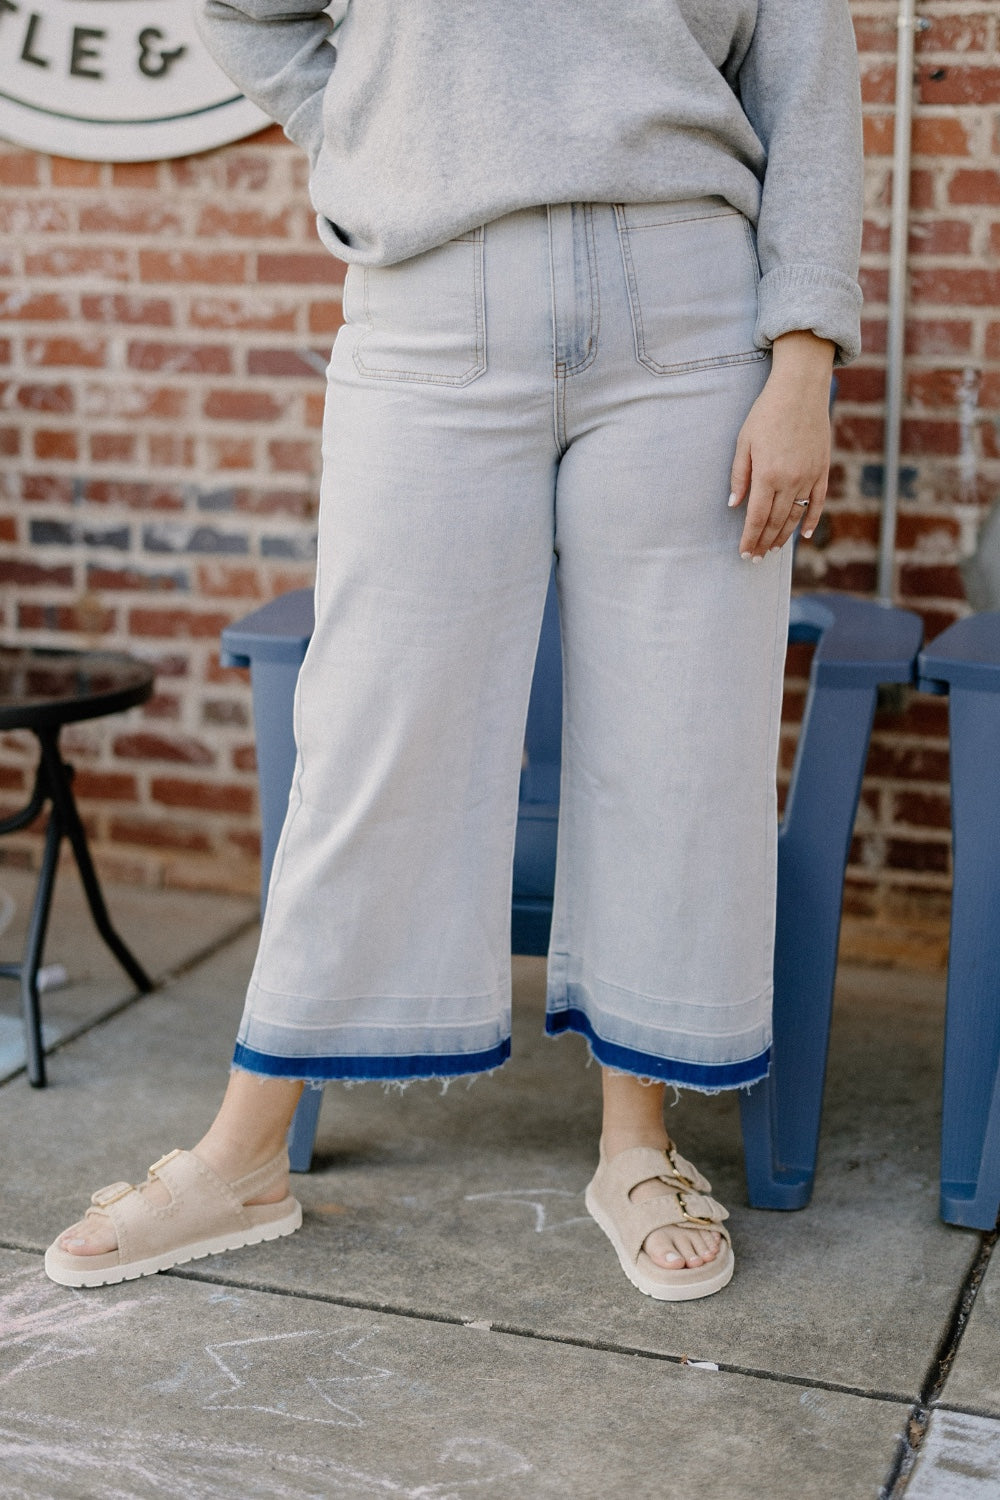 Northern Reflections Basic Blue Comfort Jean in Denim/Dark Wash | Size: 14 Ankle